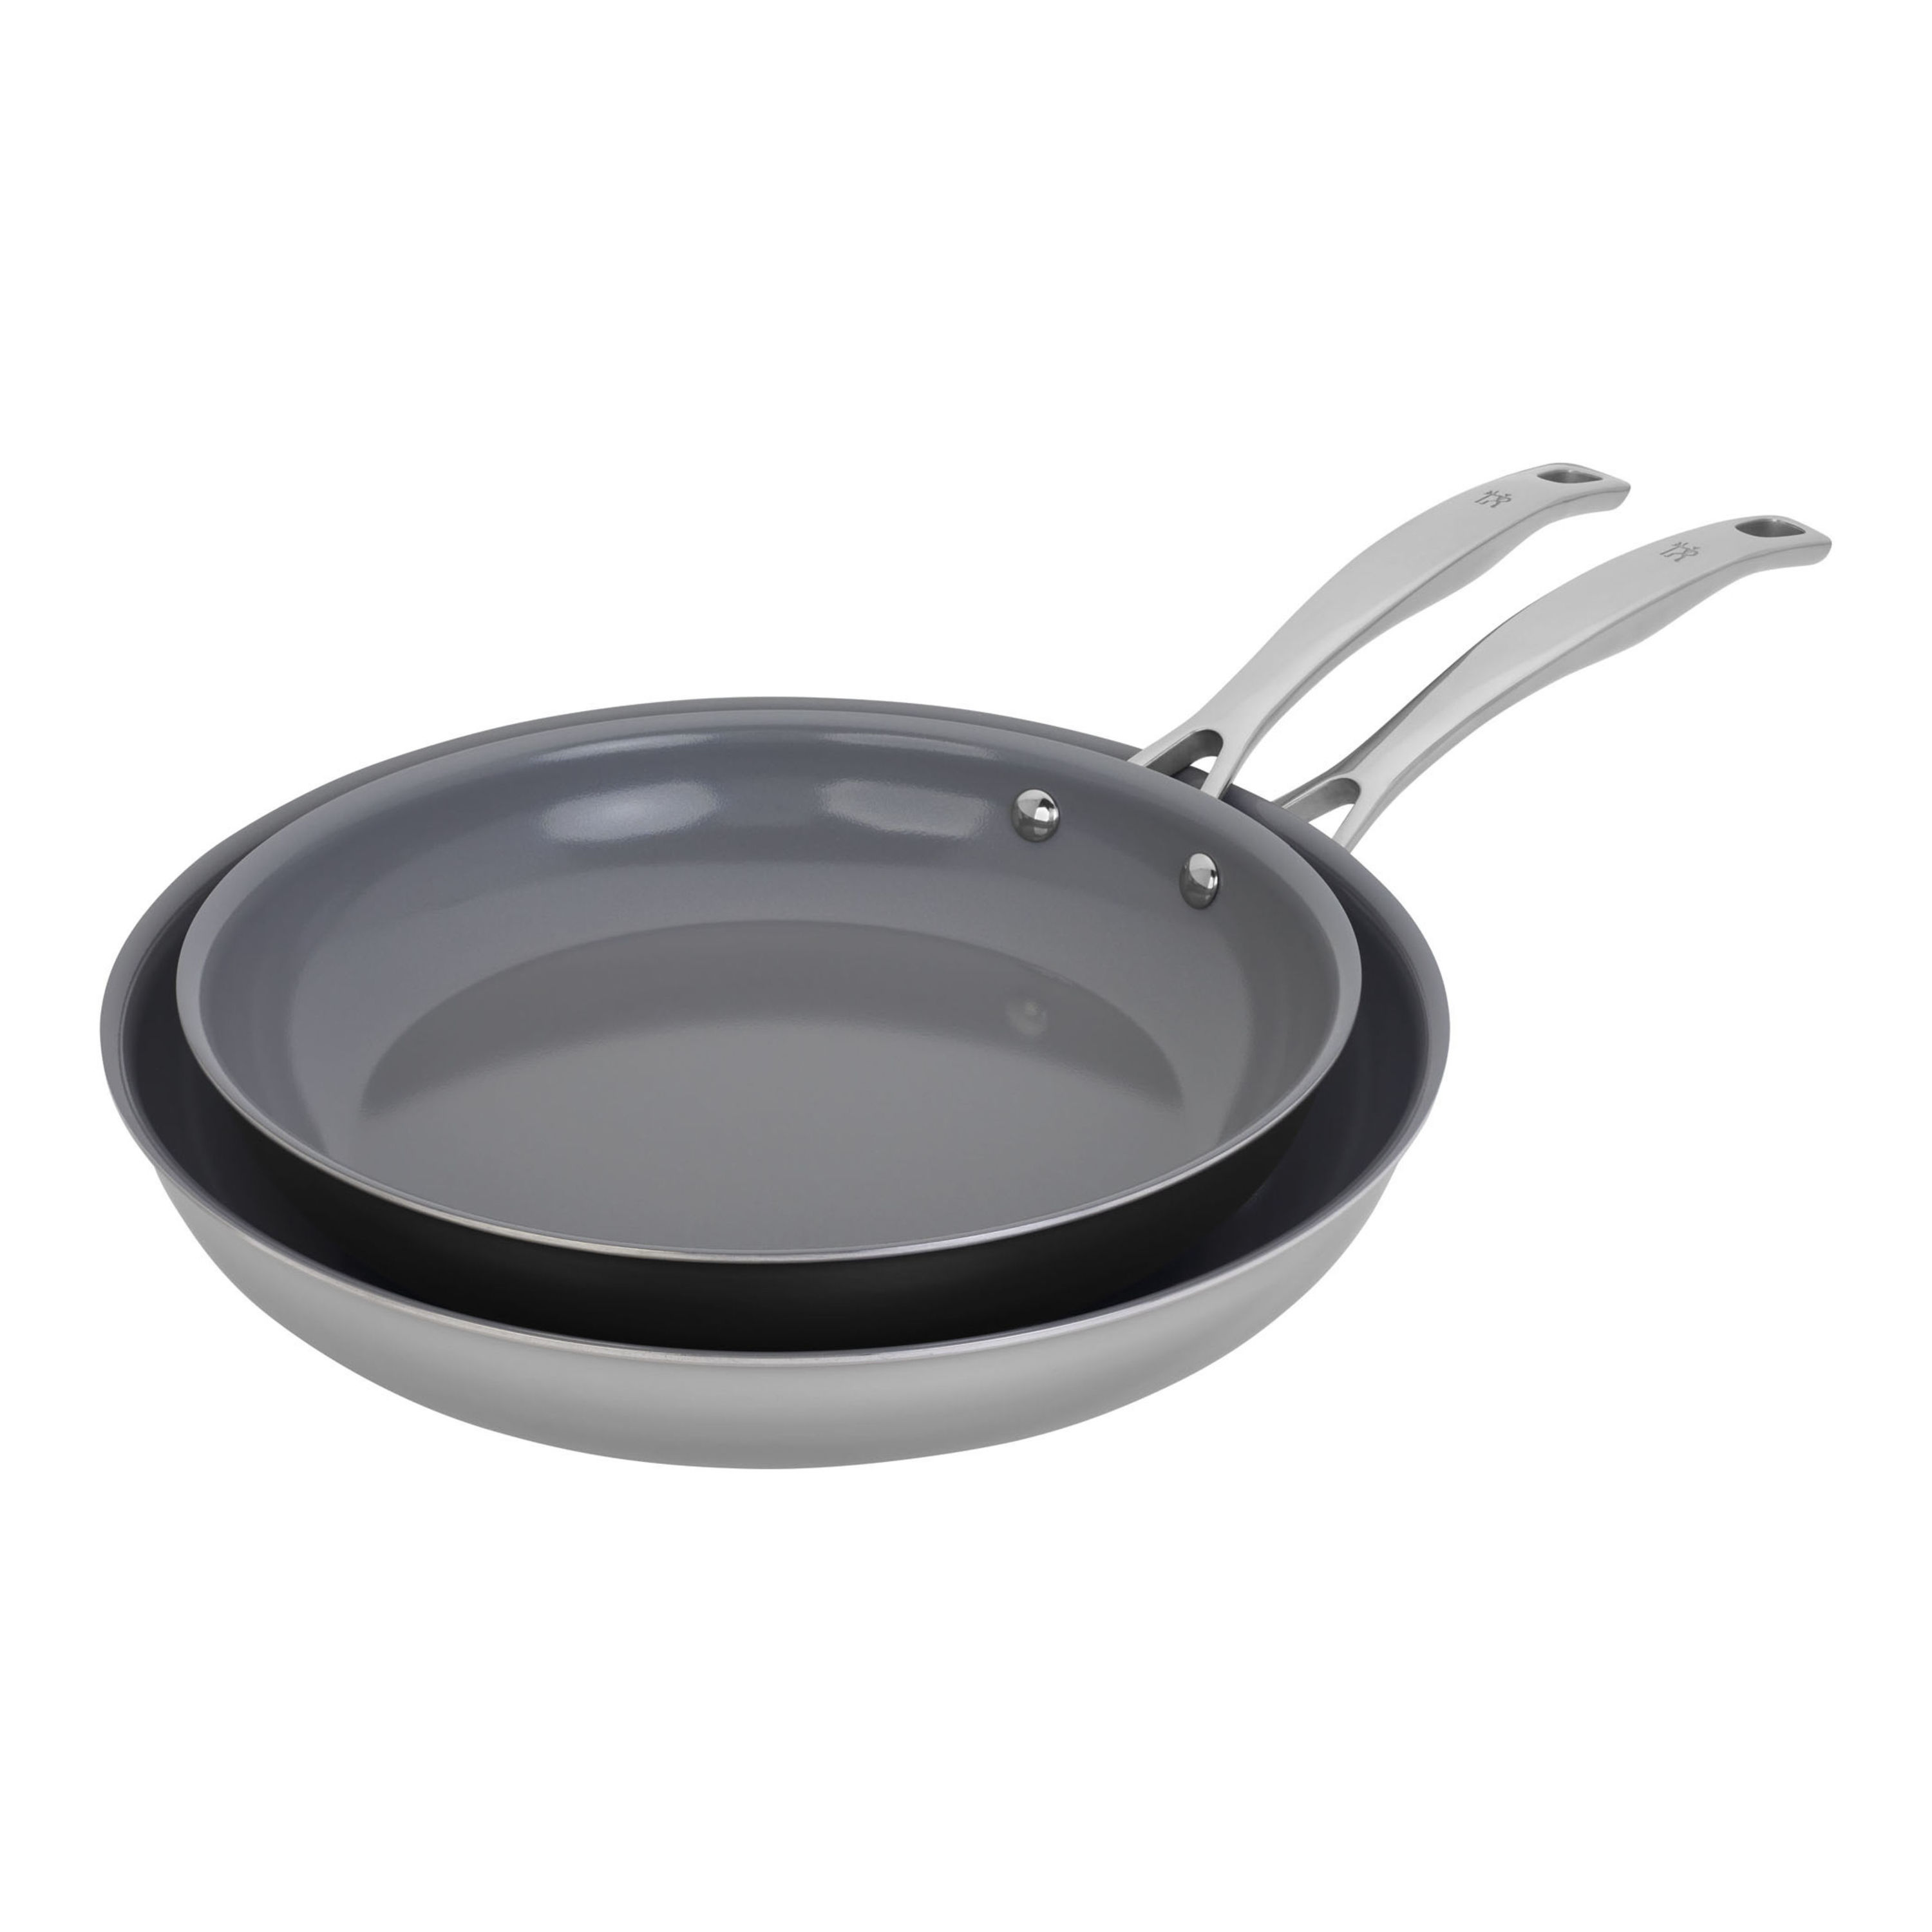 Buy Henckels Clad Impulse Pots and pans set